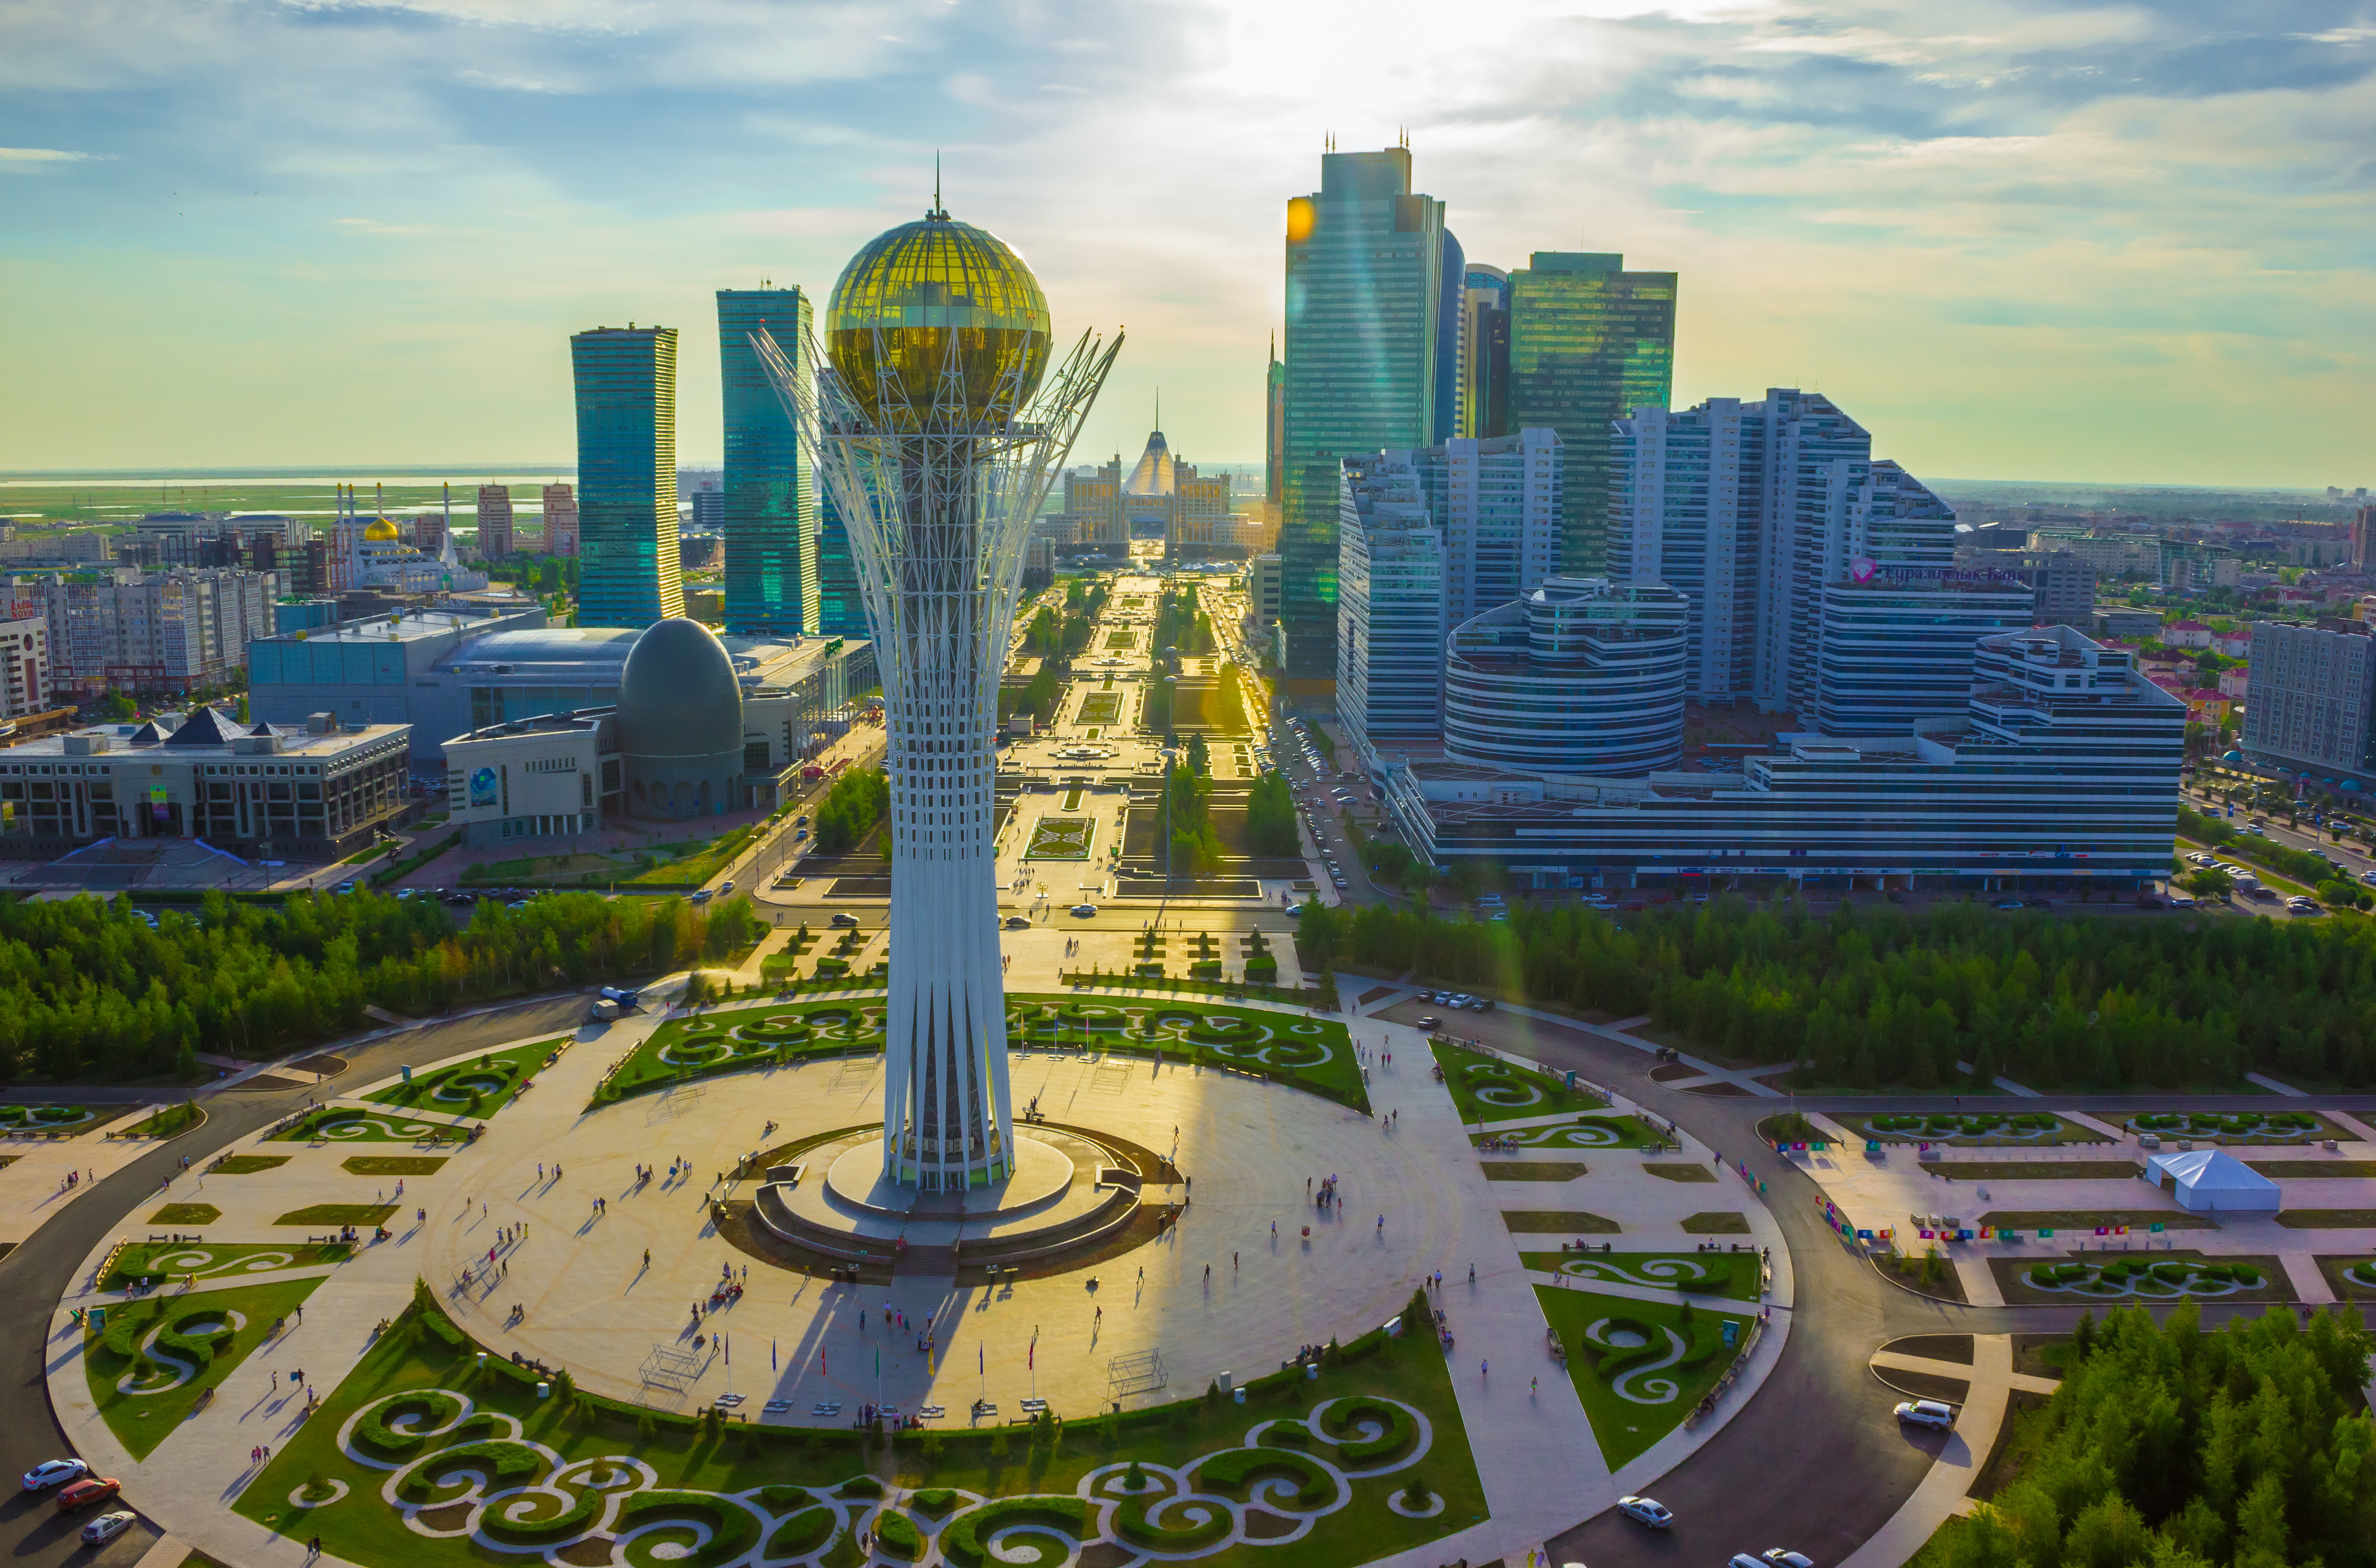 Qfl казахстан. Монумент Астана-Байтерек. Достопримечательности Астаны 2022.